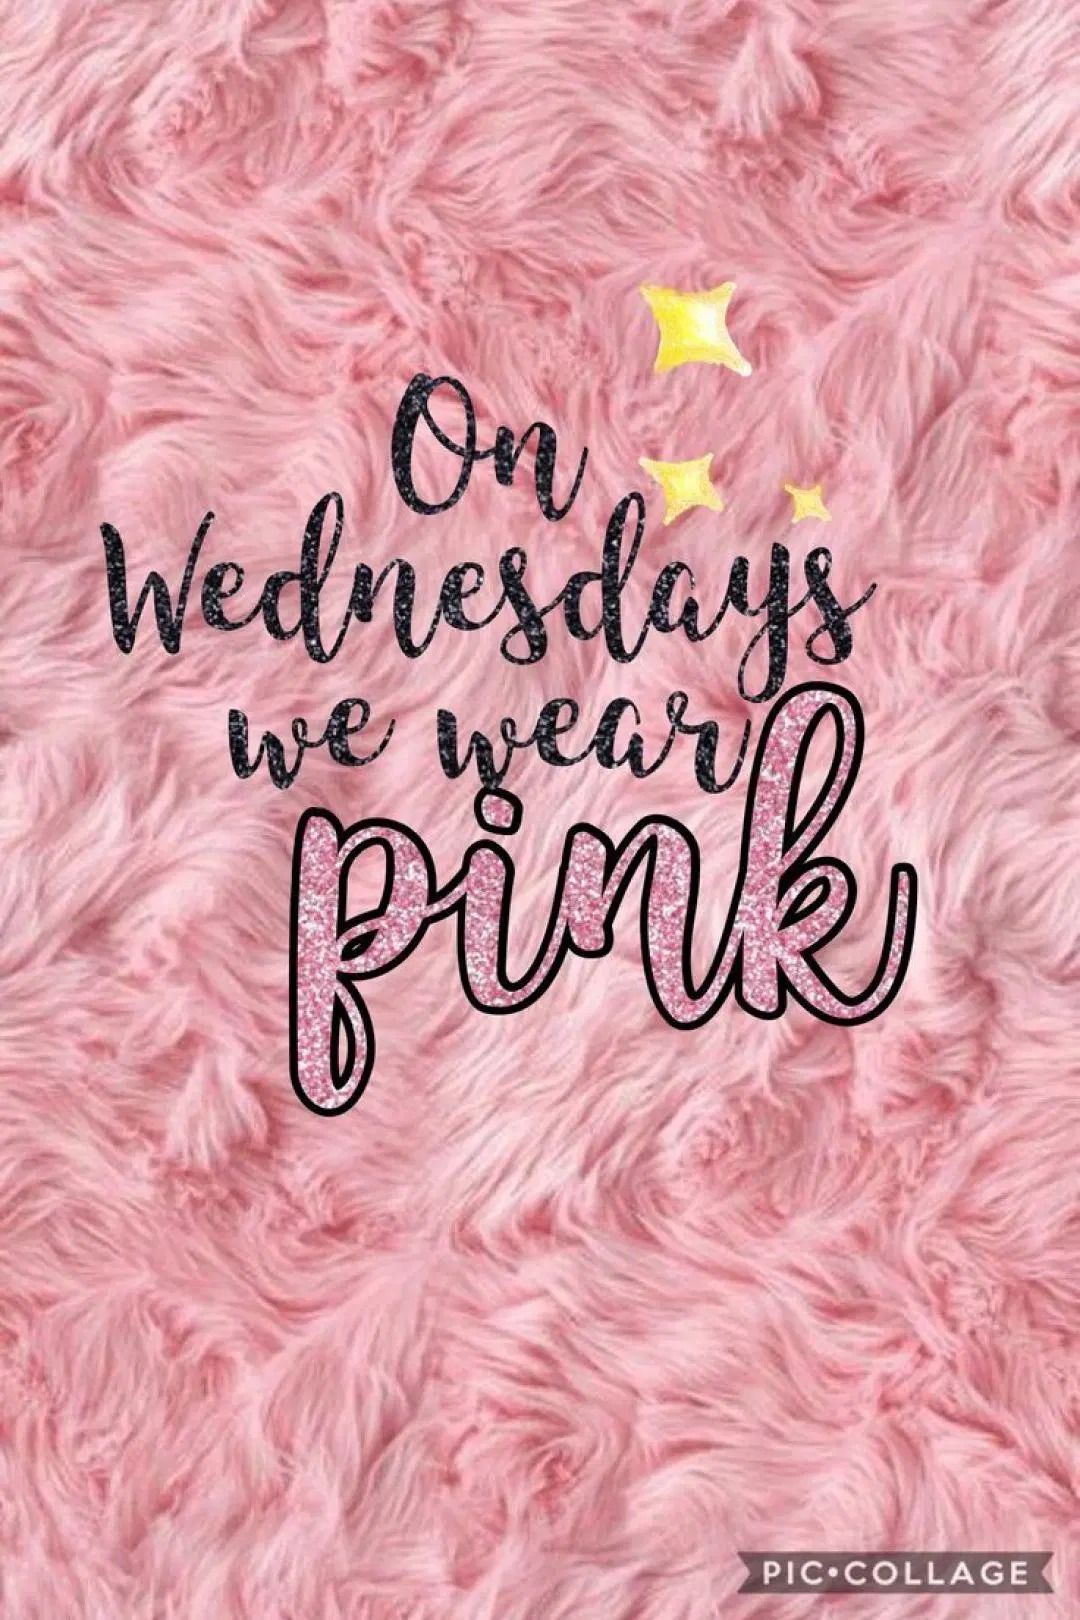 High Quality On Wednesdays we wear pink Blank Meme Template